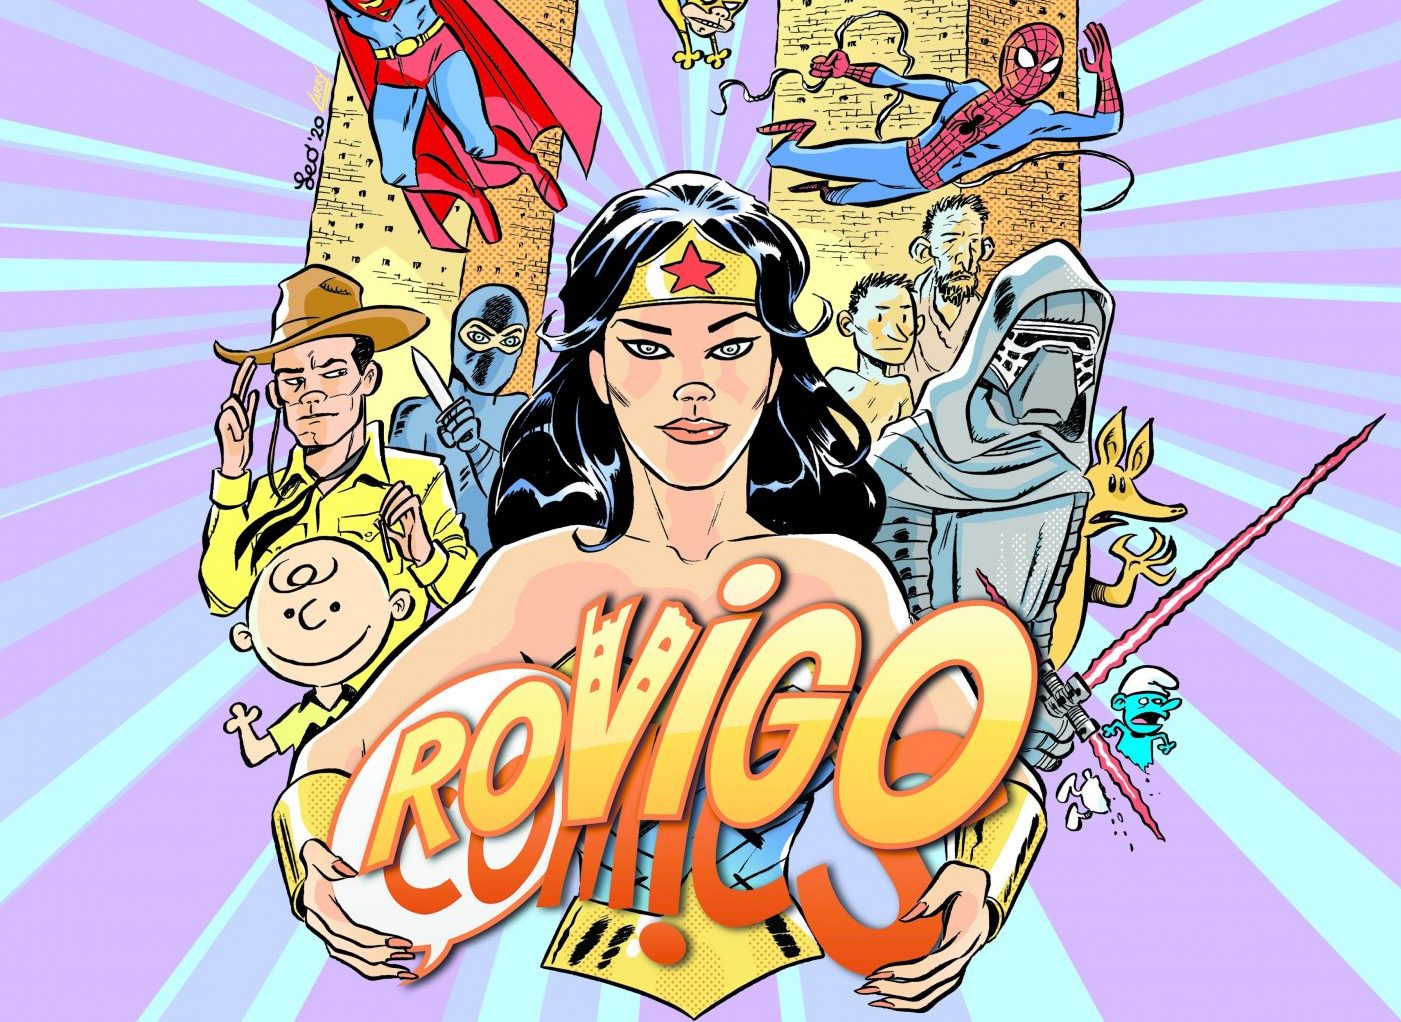 rovigo cosplay comics games